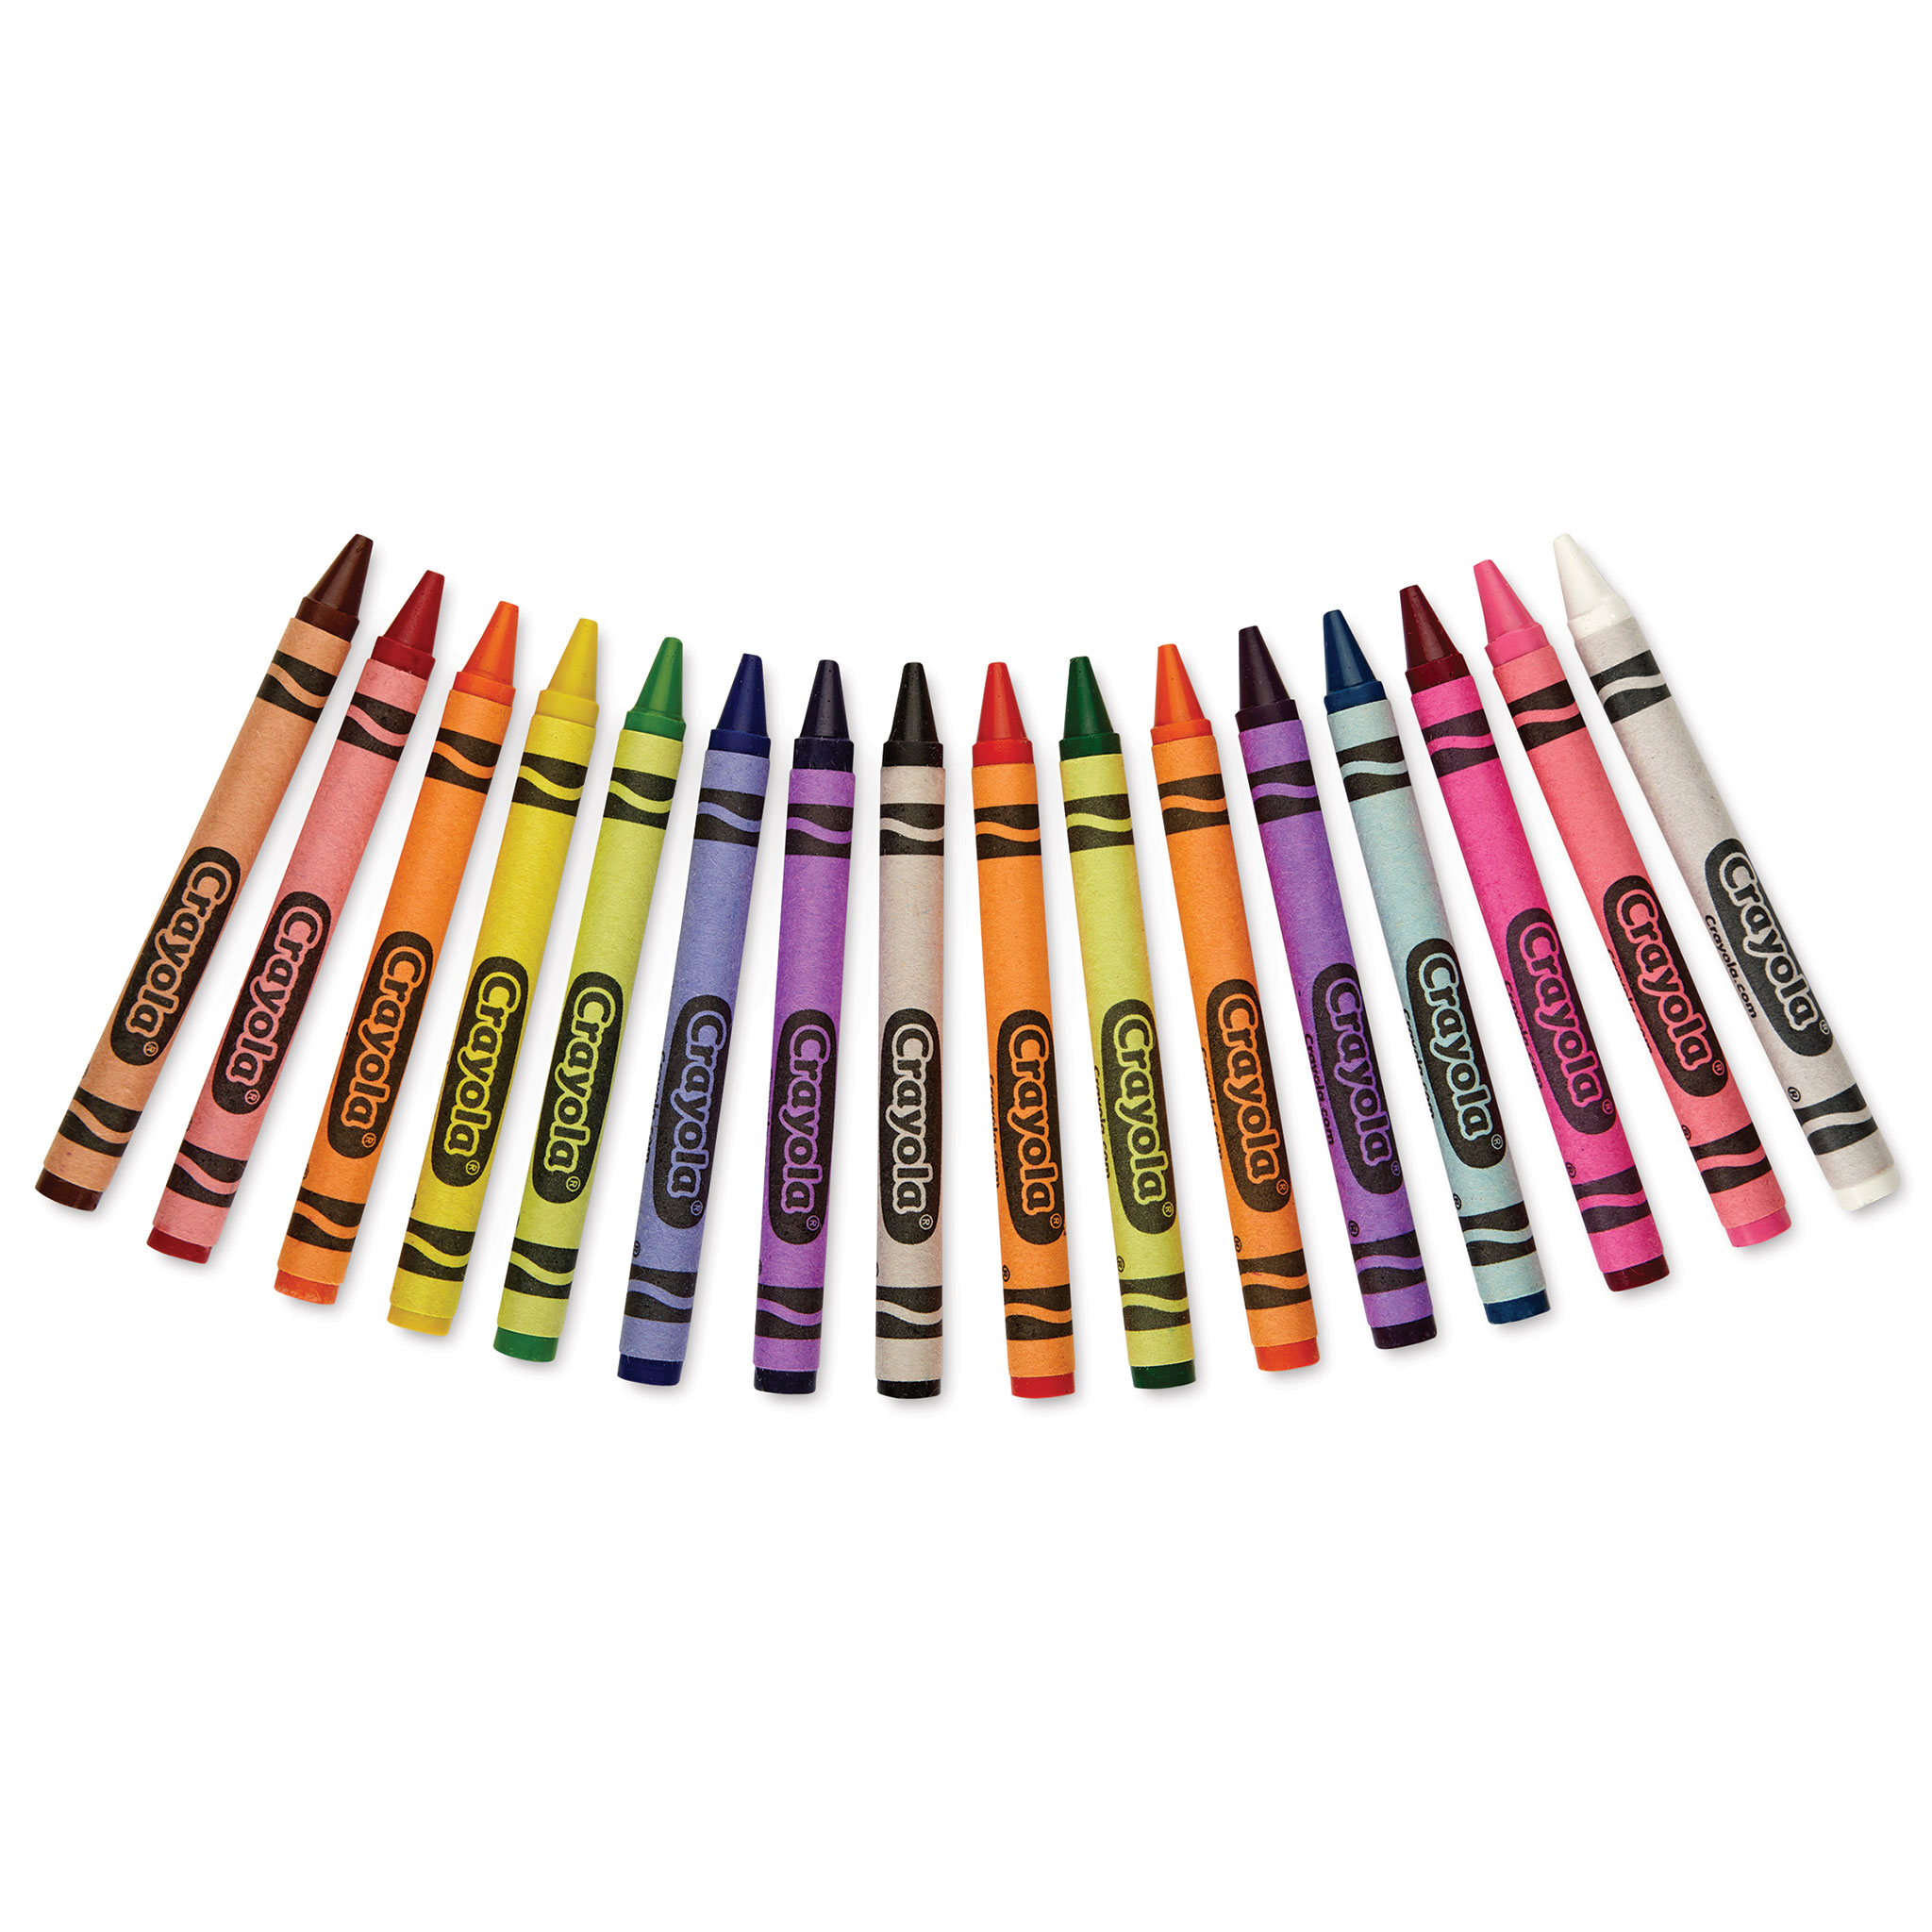 (16) Crayola Crayons (carnation pink) BULK